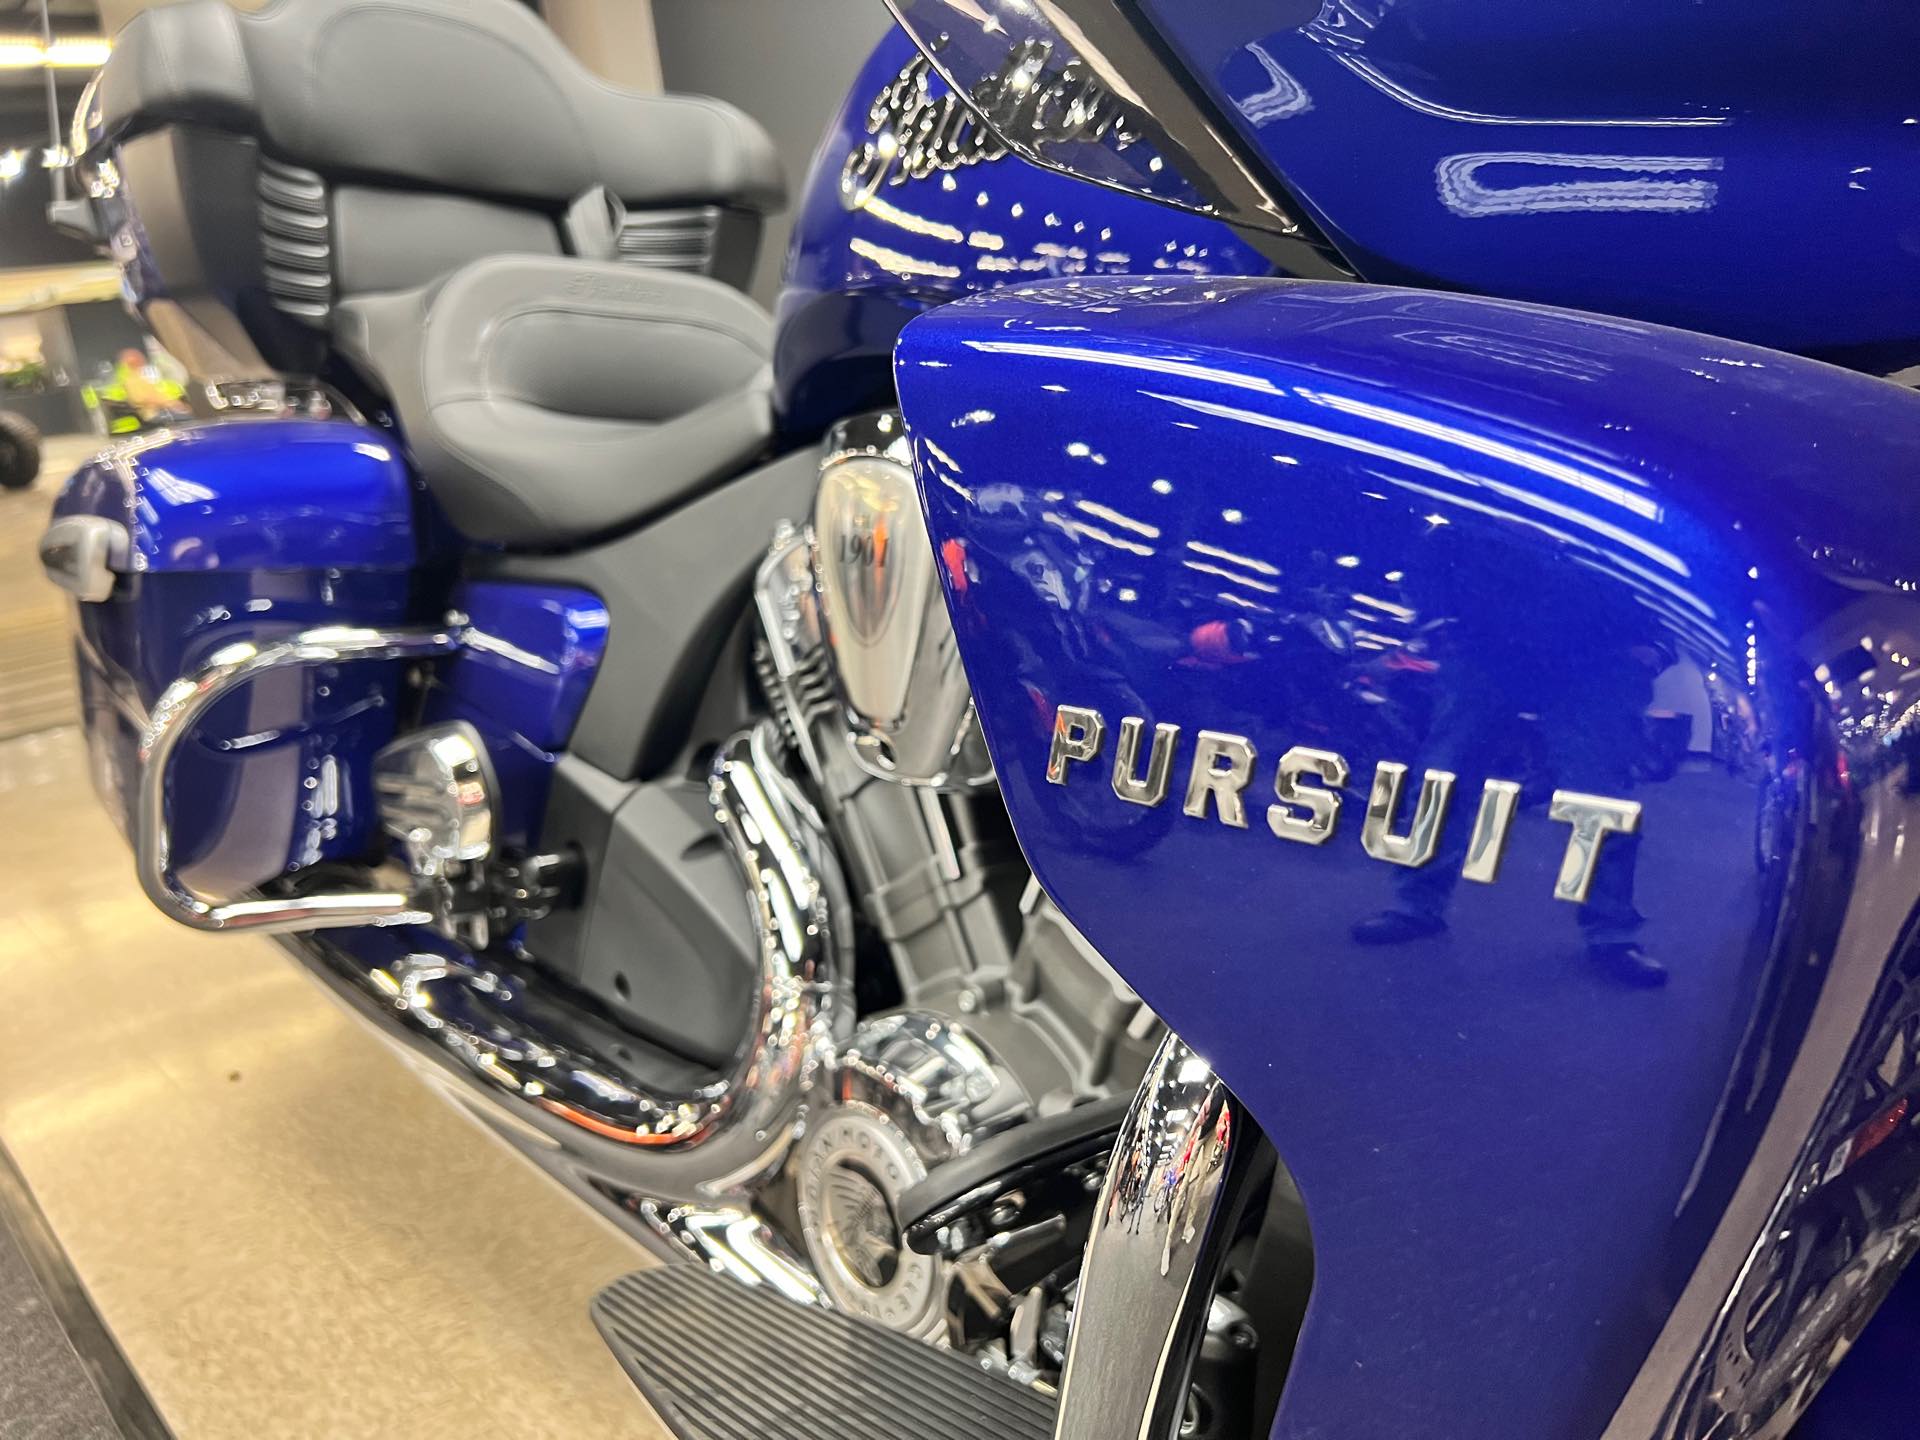 2023 Indian Motorcycle Pursuit Limited at Sloans Motorcycle ATV, Murfreesboro, TN, 37129